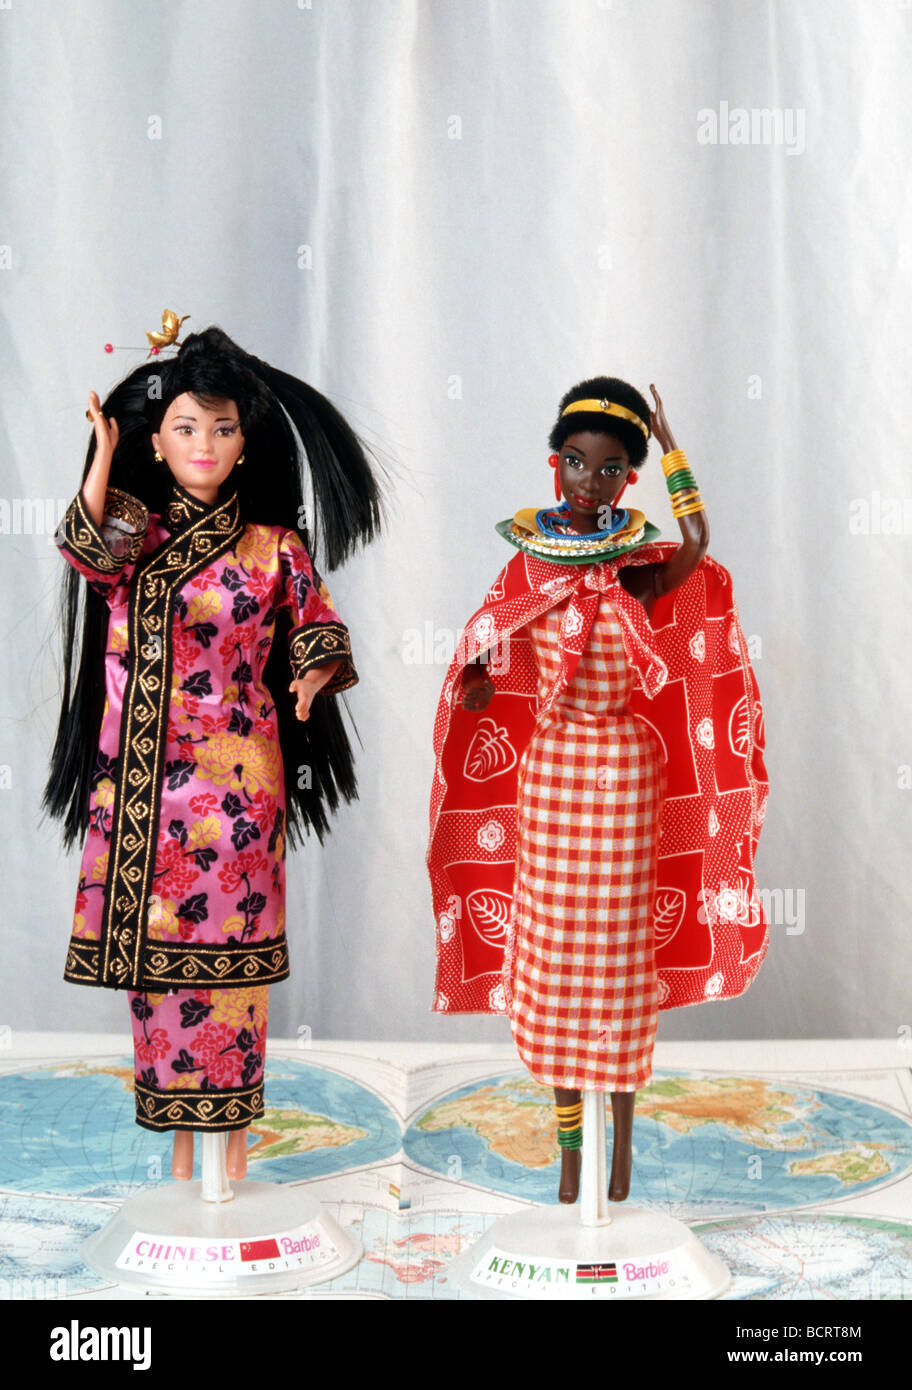 Country Barbies or international Barbie dolls: One Asian Barbie doll Stock  Photo - Alamy